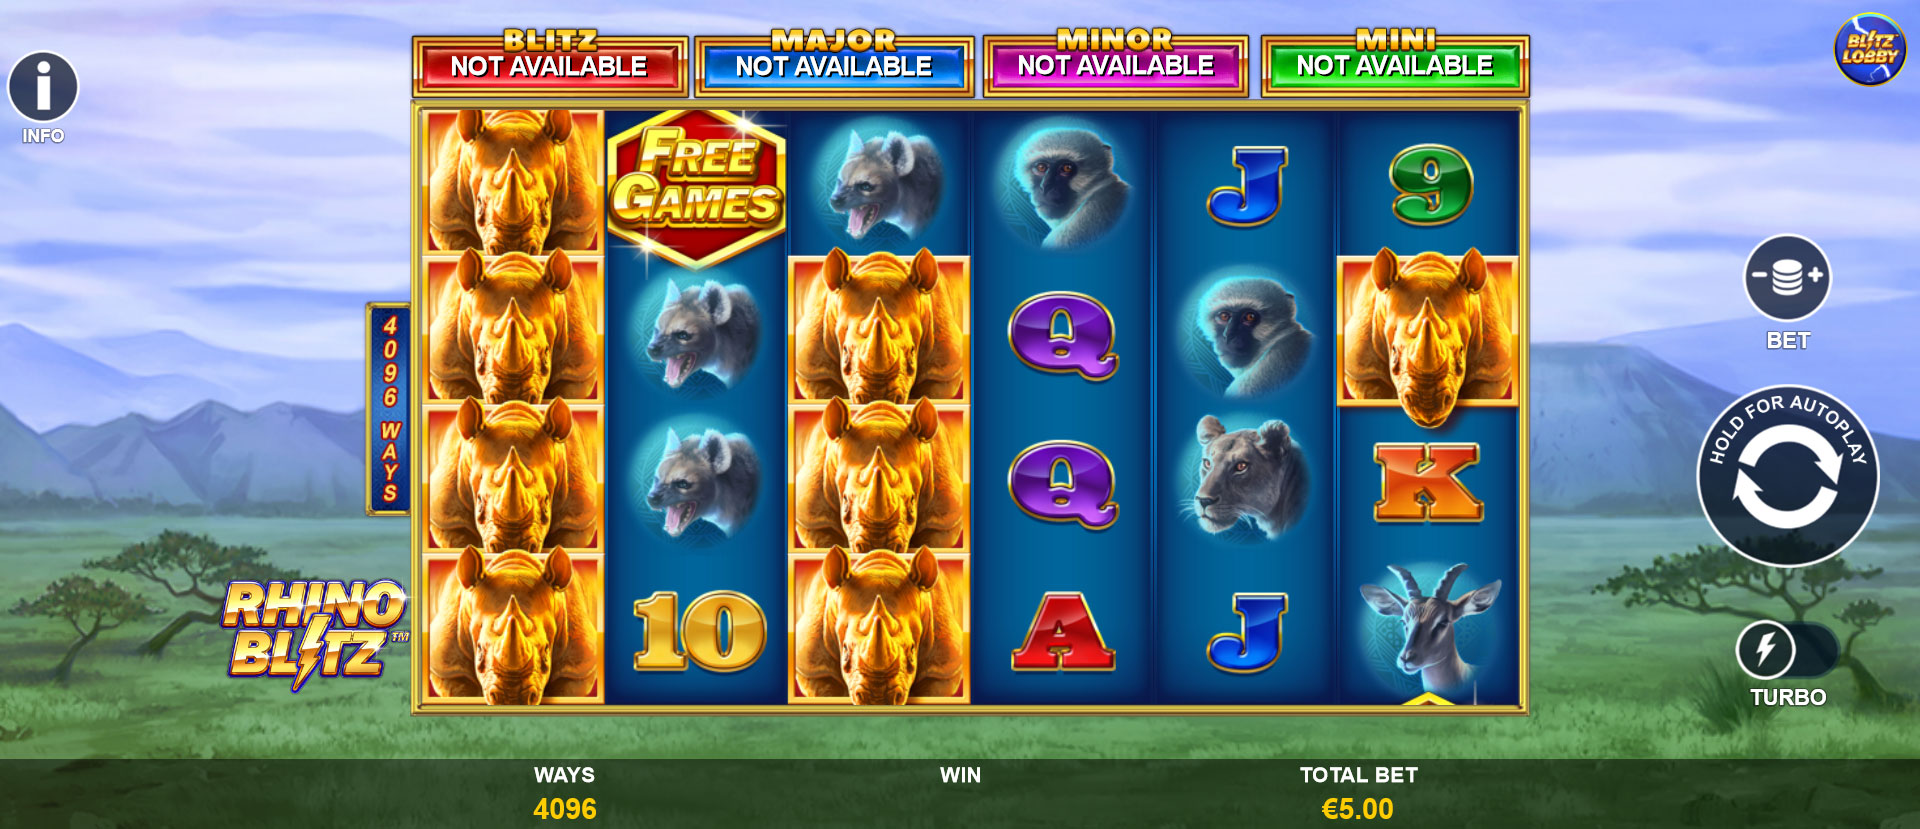 schermata del gioco slot machine Rhino Blitz